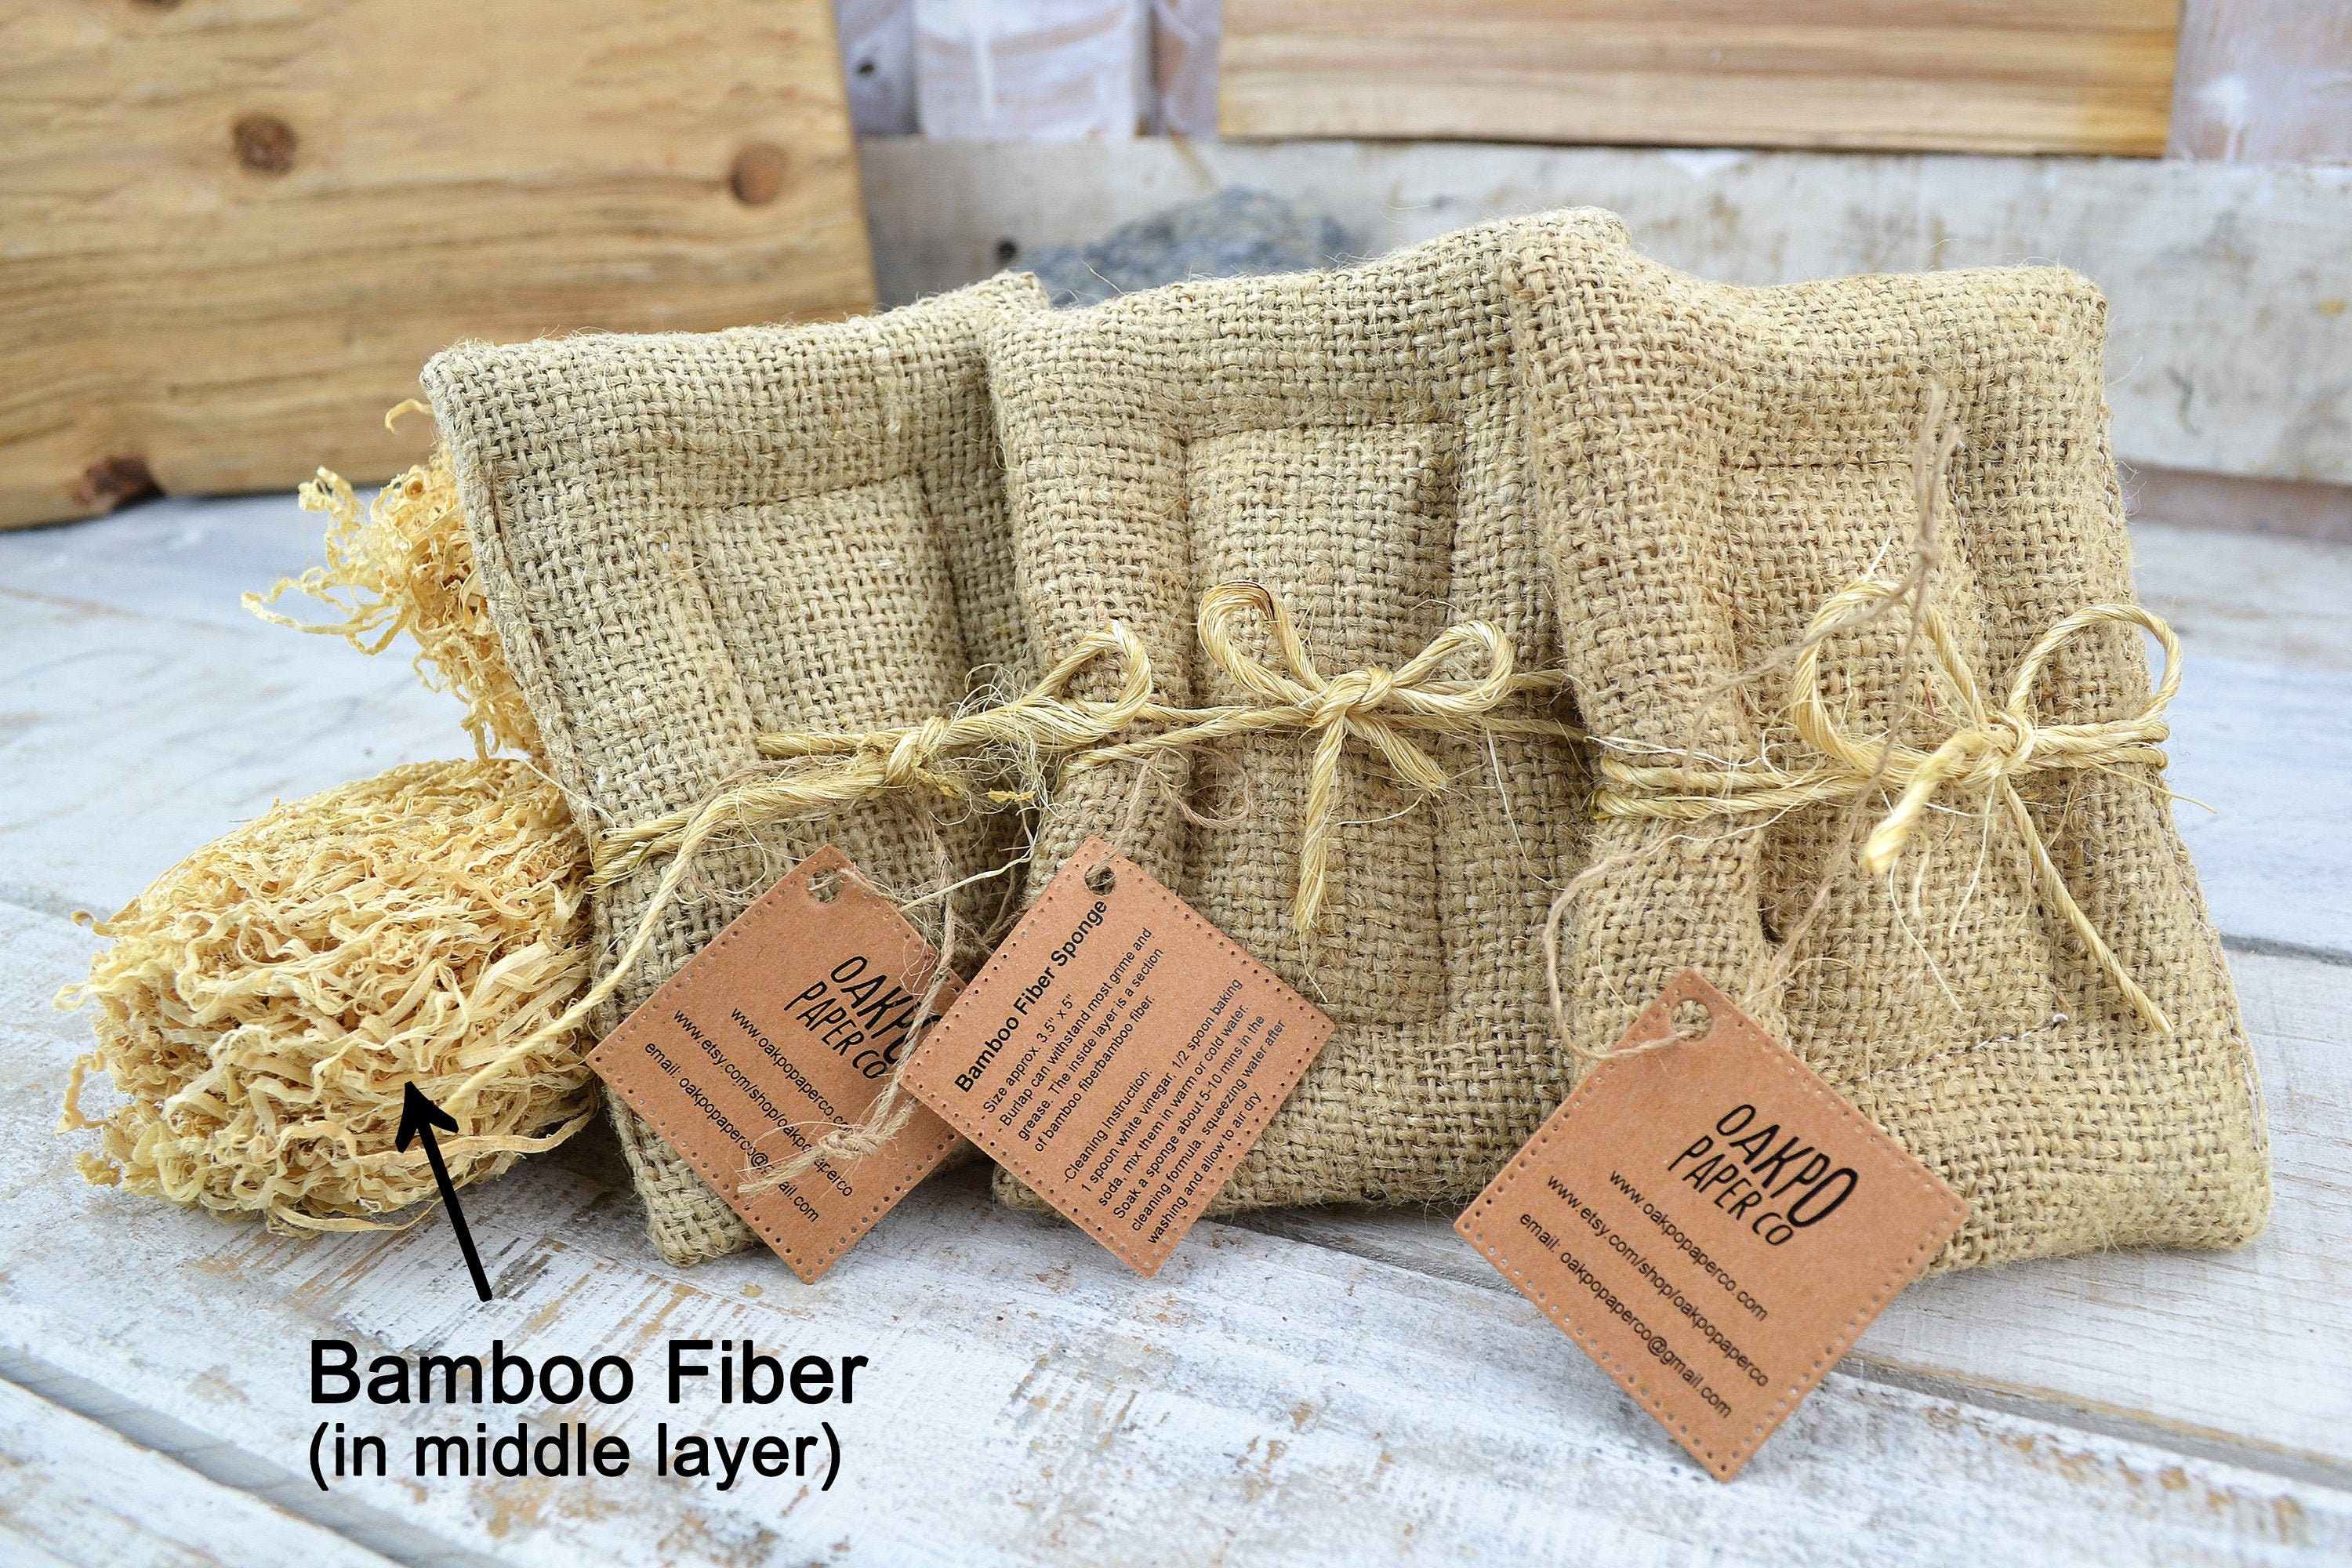 Heavy Duty Sponge with Bamboo Fiber, Reusable Kitchen Sponge